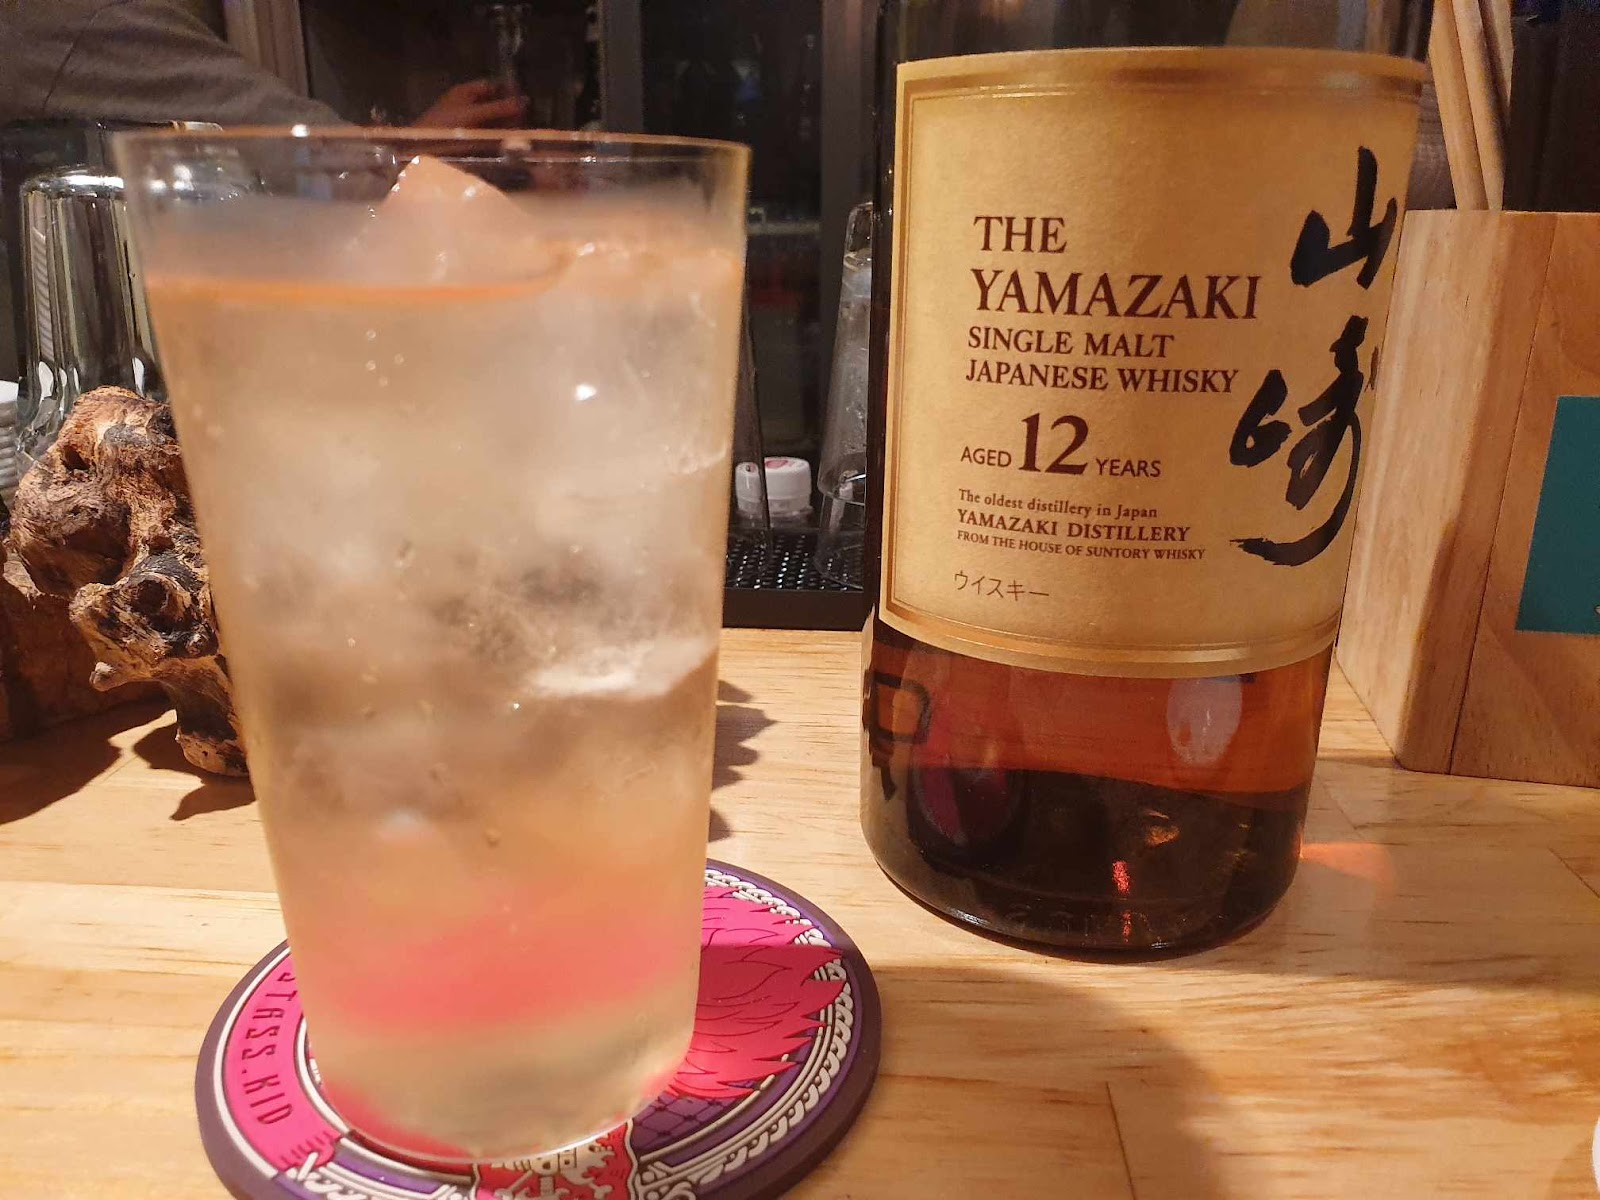 Yamazaki single malt whisky aged 12 years and accompanying highball